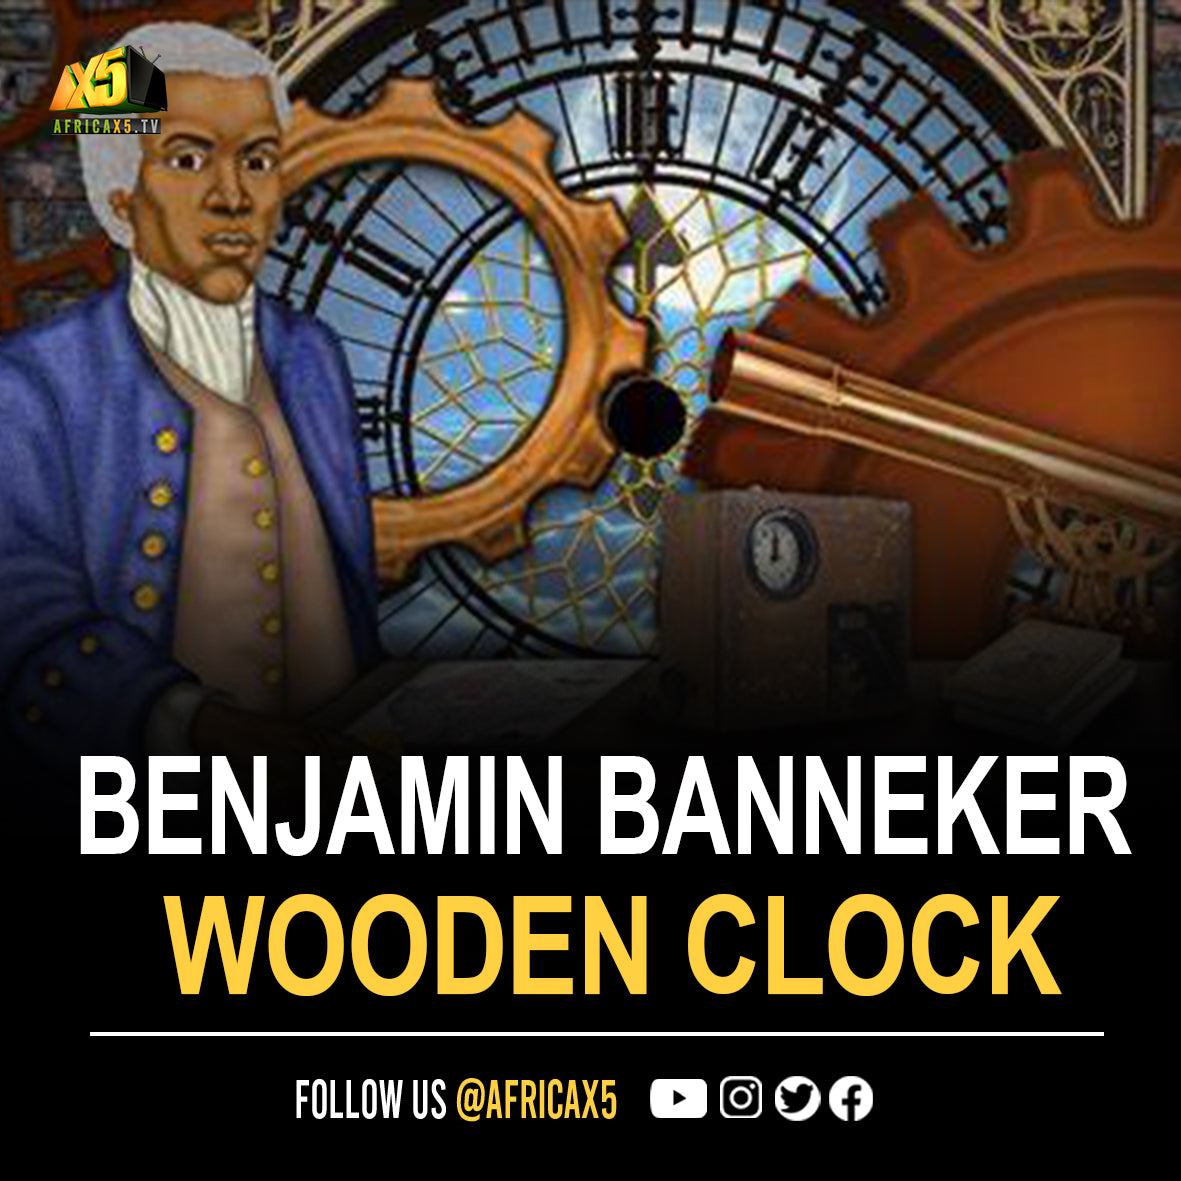 Benjamin Banneker invented first wooden clock in America